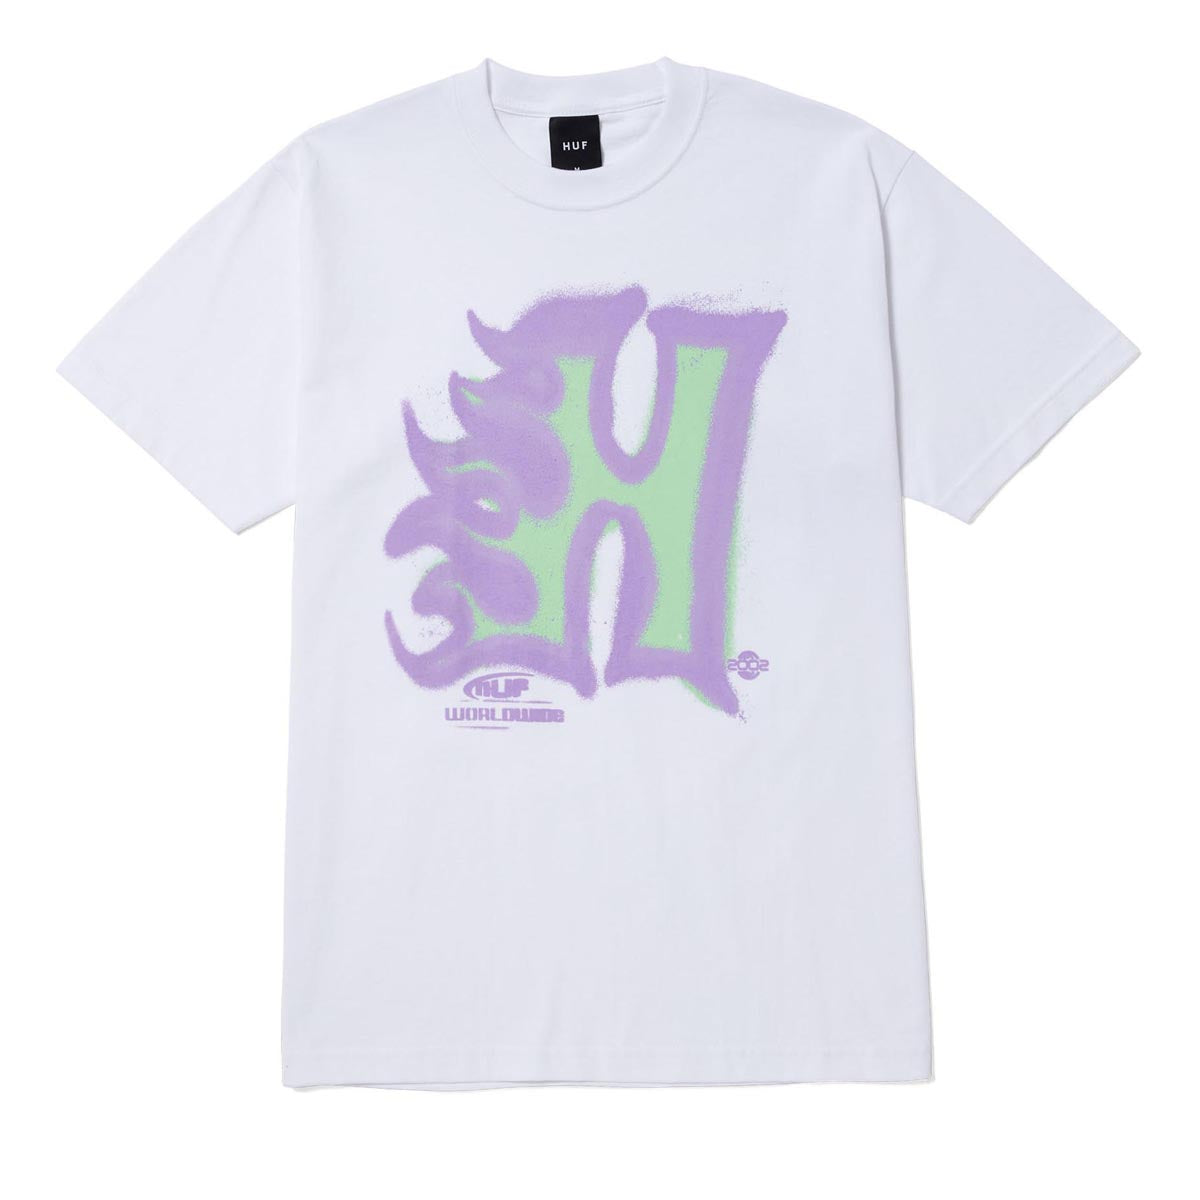 HUF Heat Wave T-Shirt - White image 1